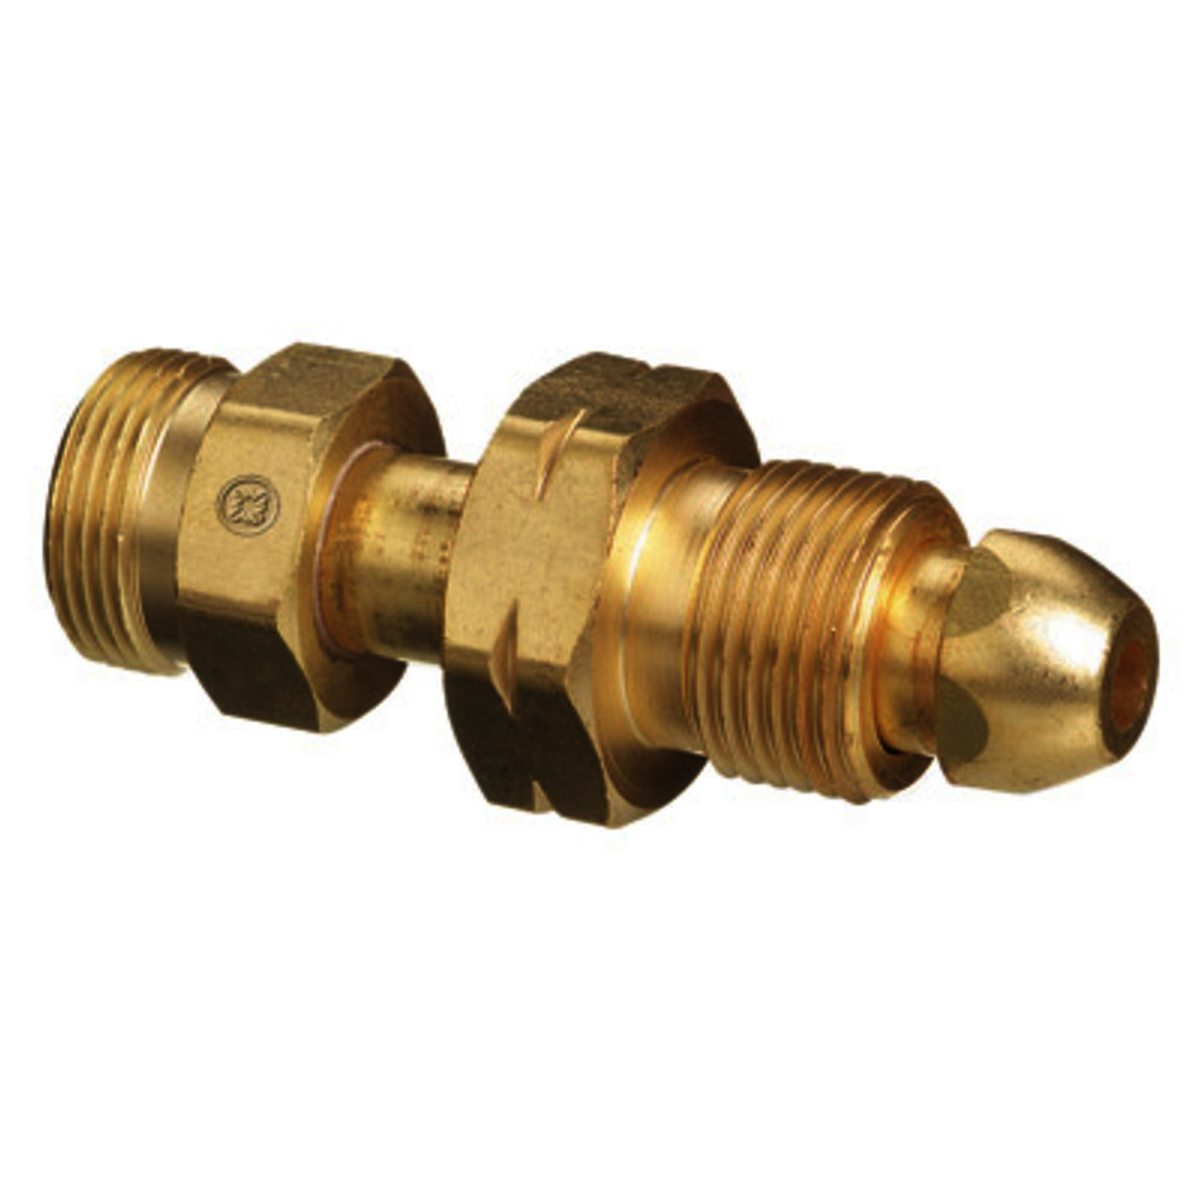 1 PER CASE Radnor 64003950 51 CGA-510 To CGA-300 Brass Cylinder Adapter 